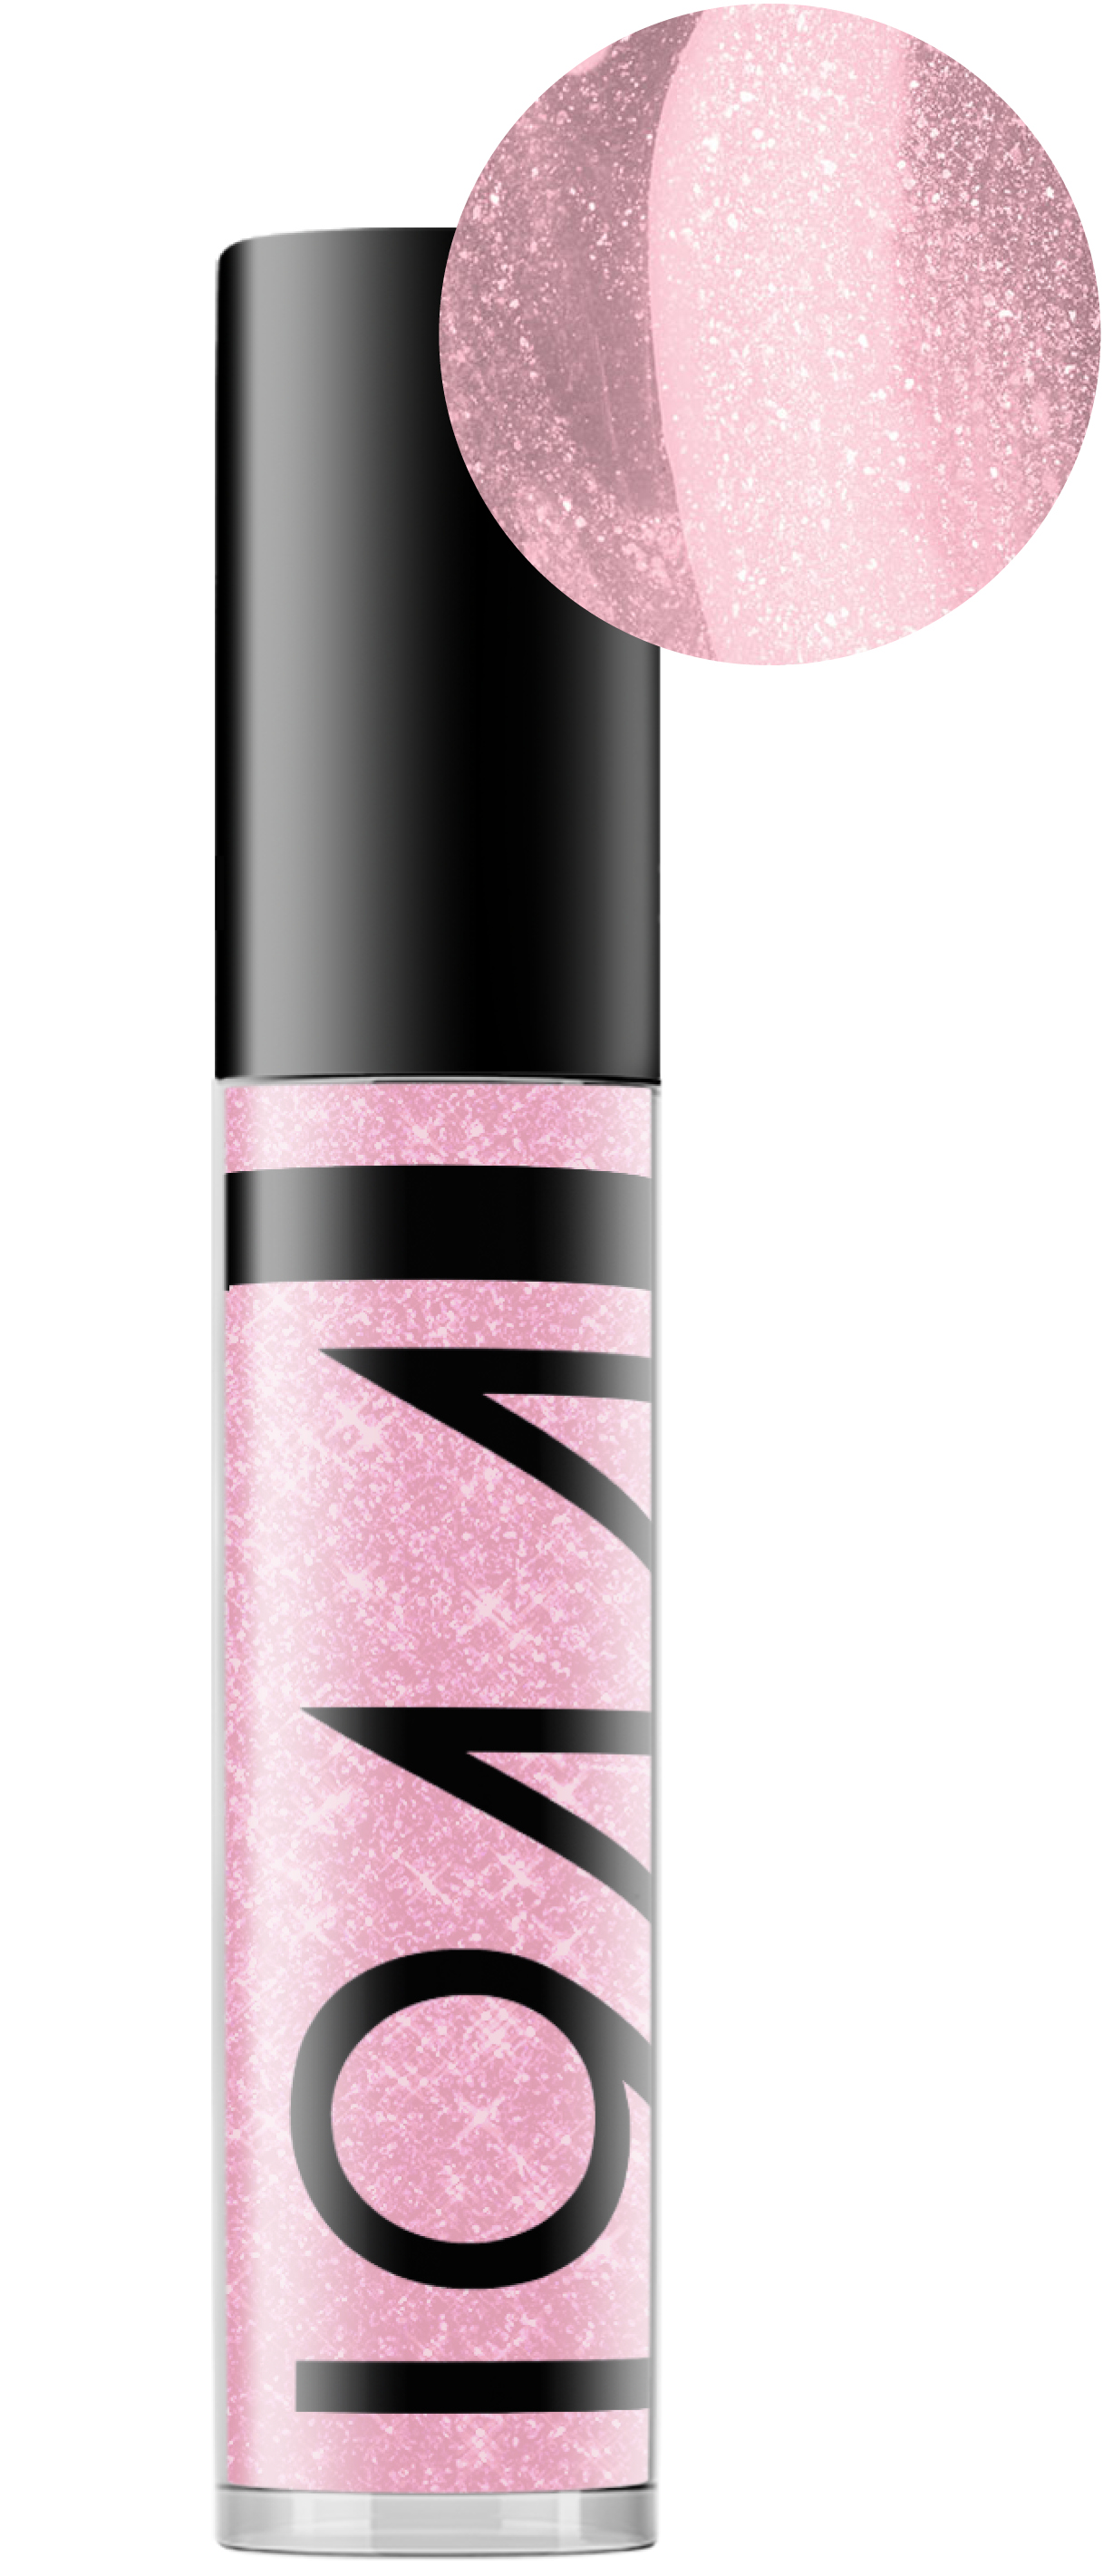 Angèle Ultra Shiny Gloss - Glittery Pink Color - Glittery Effect